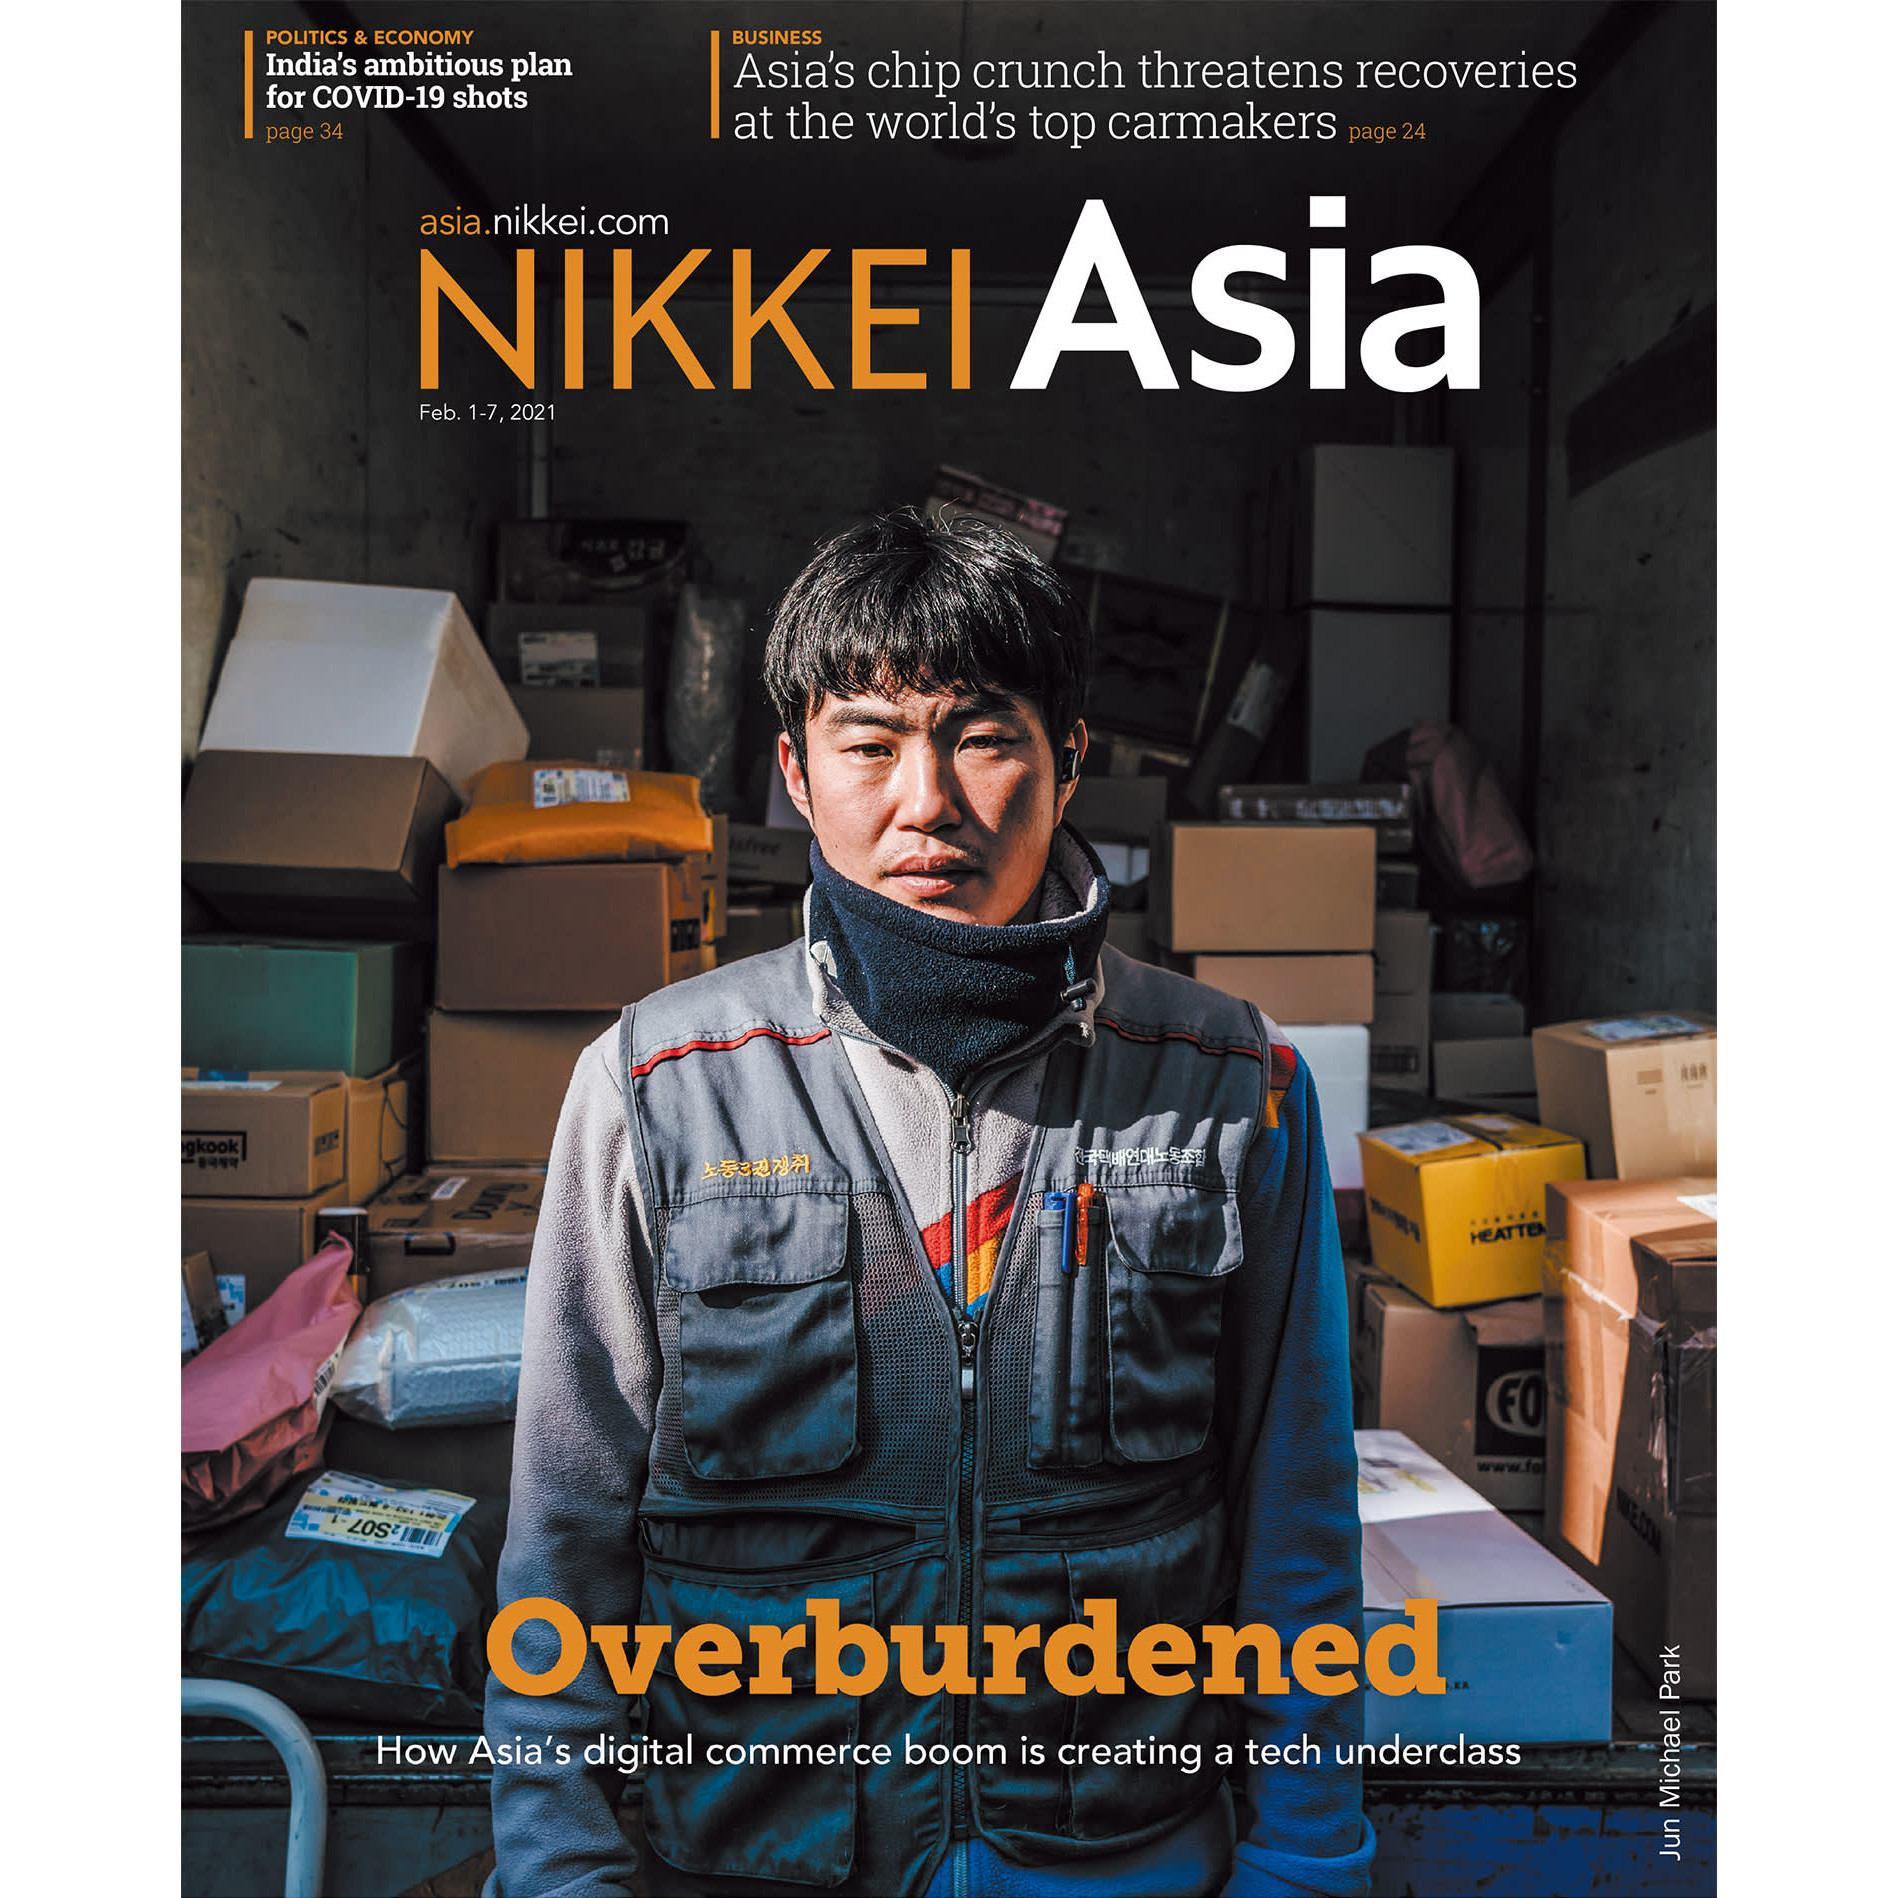 Nikkei Asian Review: Nikkei Asia - 2021: OVERBURDENED - 5.20, tạp chí kinh tế nước ngoài, nhập khẩu từ Singapore